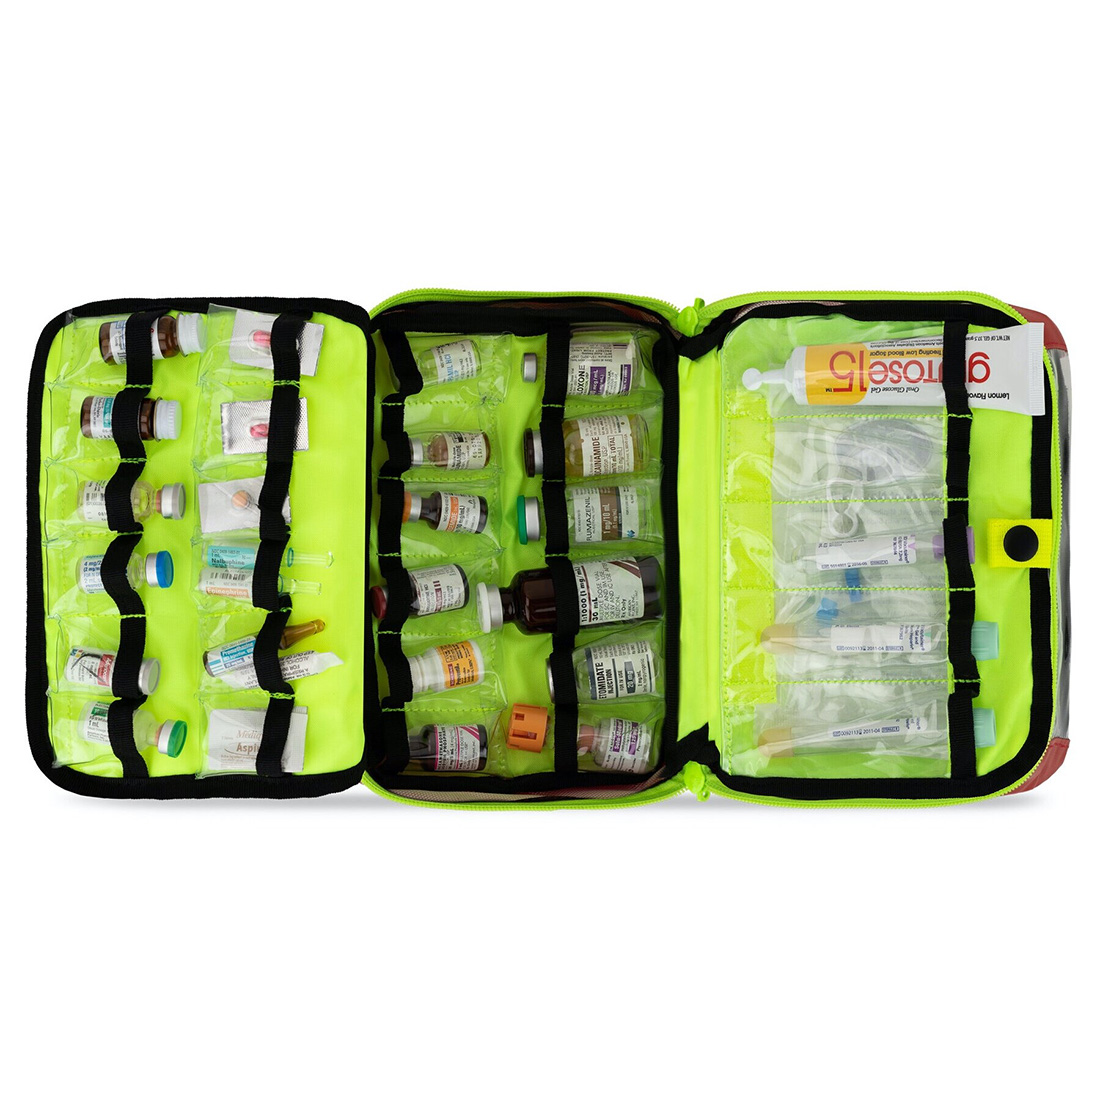 Statpack G3 Universal First Aid Kit